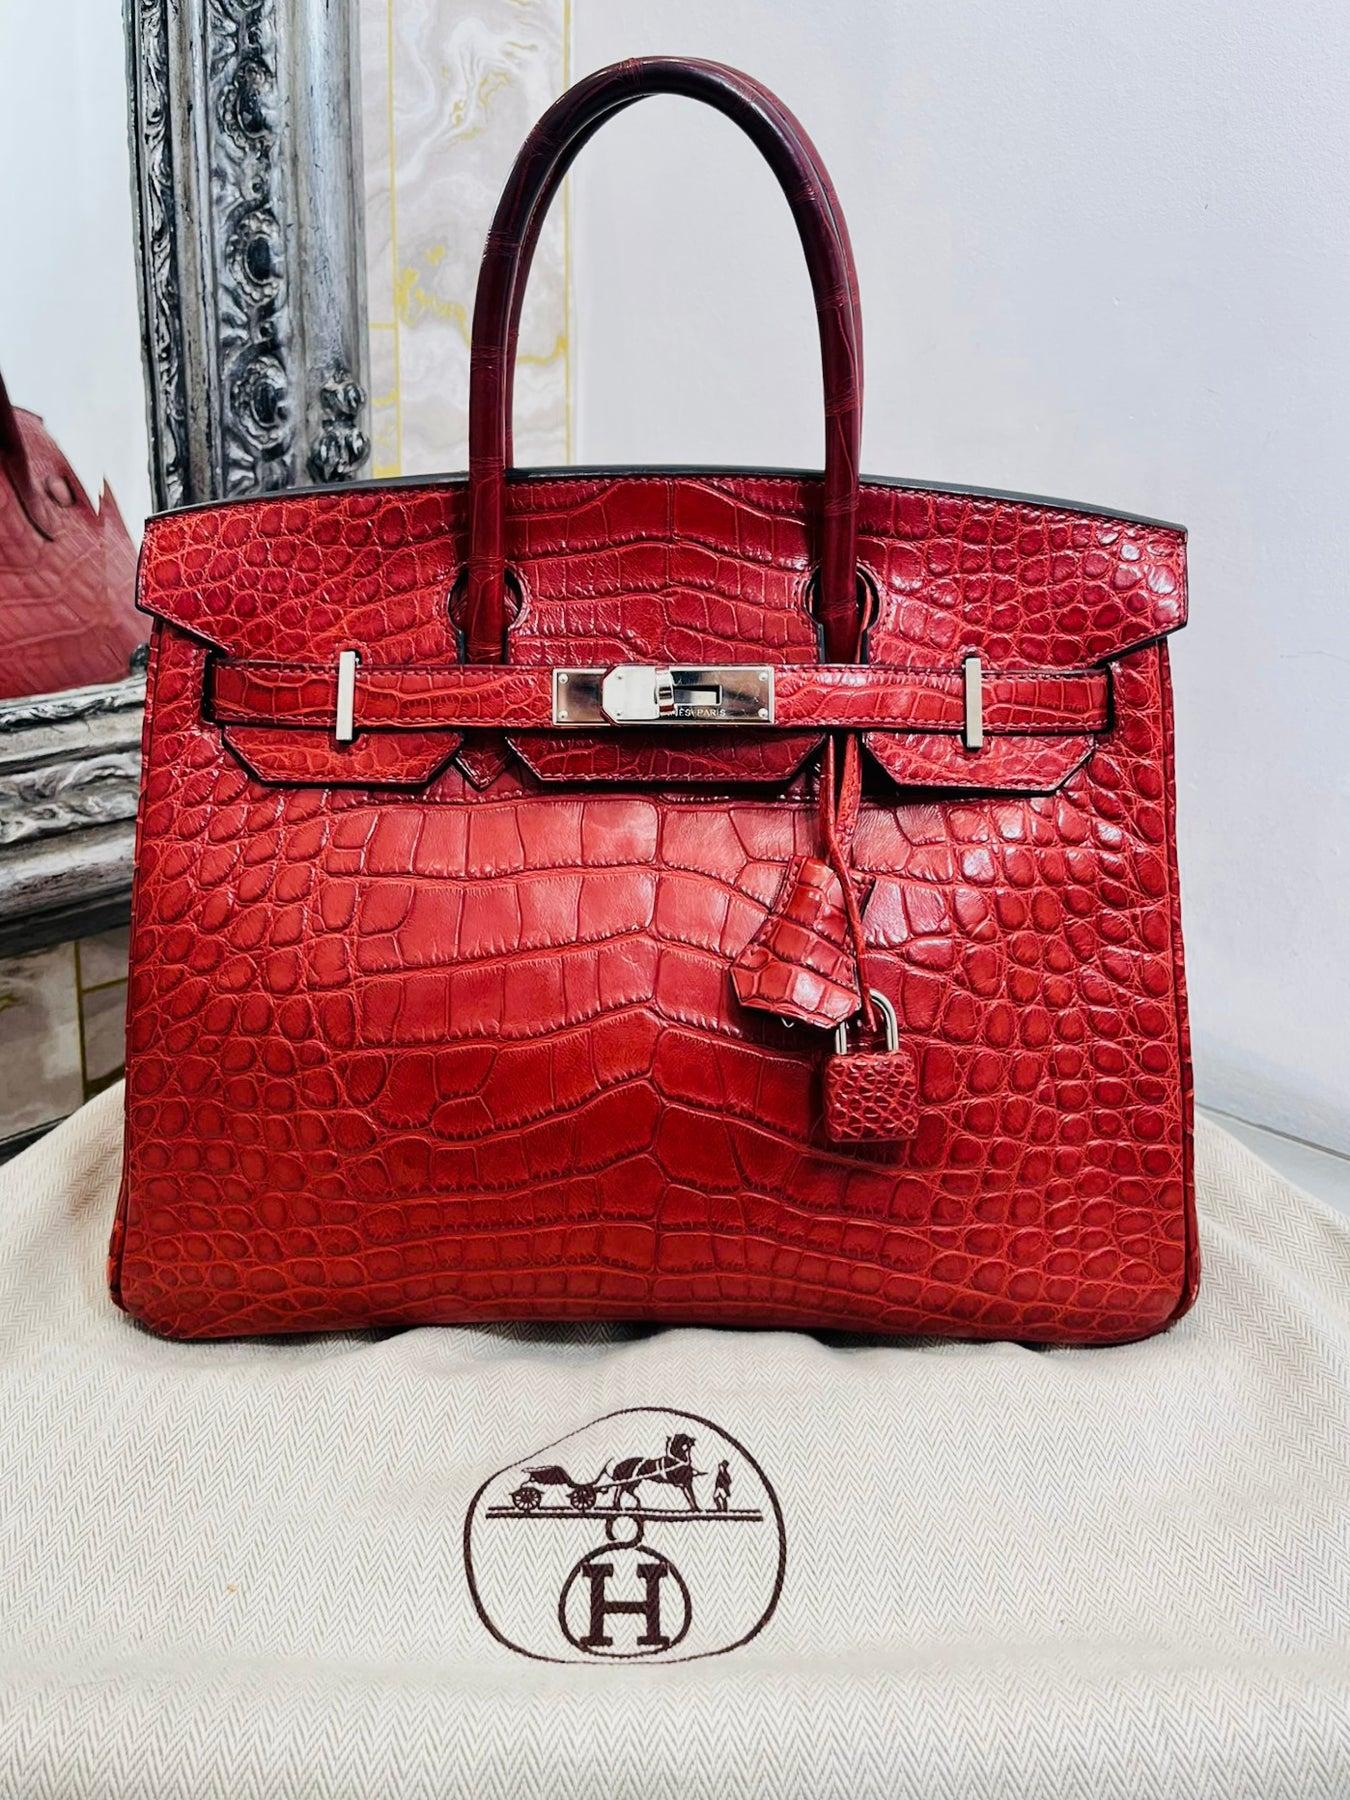 Hermes Birkin 30 Alligator Mississippiensis Skin Handbag For Sale 1